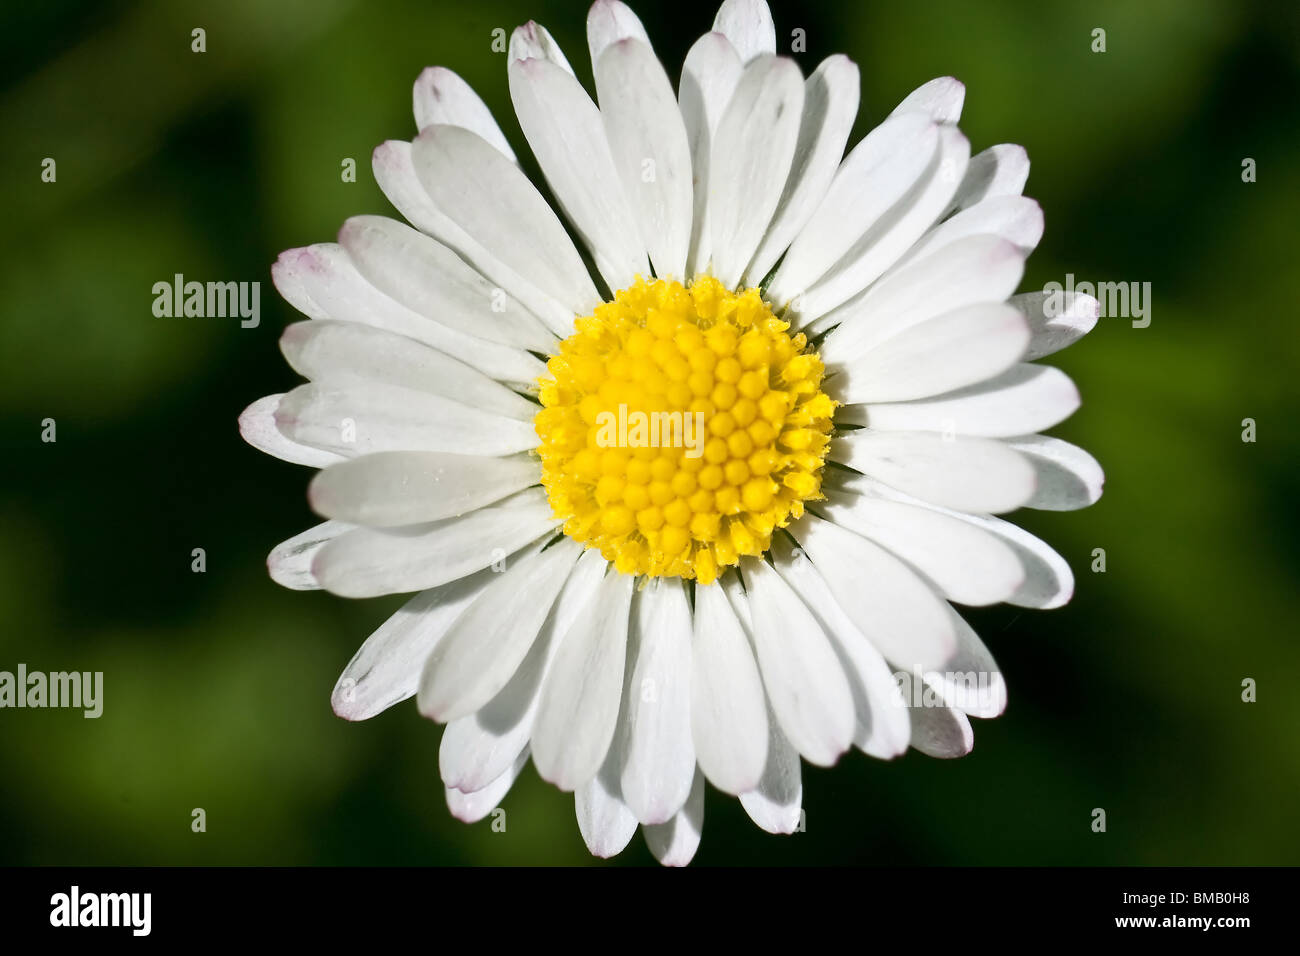 daisy, beautiful extreme closeup, macro photograph, beauty of nature Stock Photo